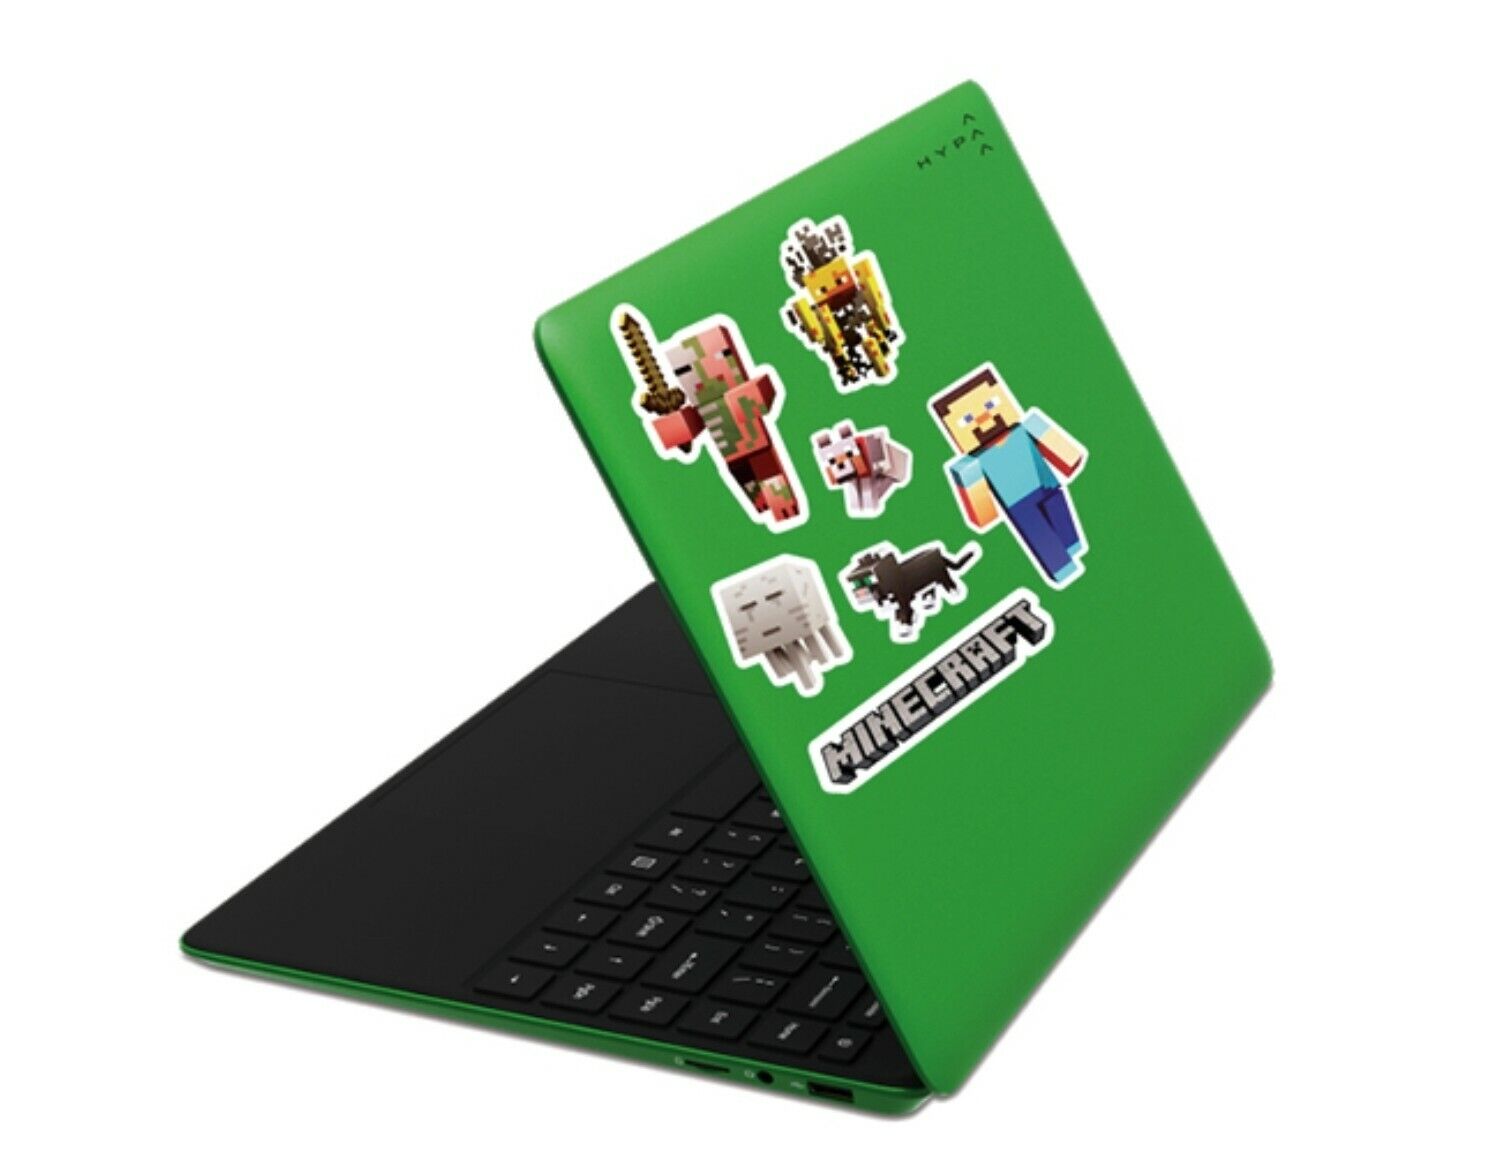 Windows-10-Minecraft-edition-Hypa-14-Inch-Pentium-4GB-RAM-64GB-eMMC-Laptop-Green-164535187648-2